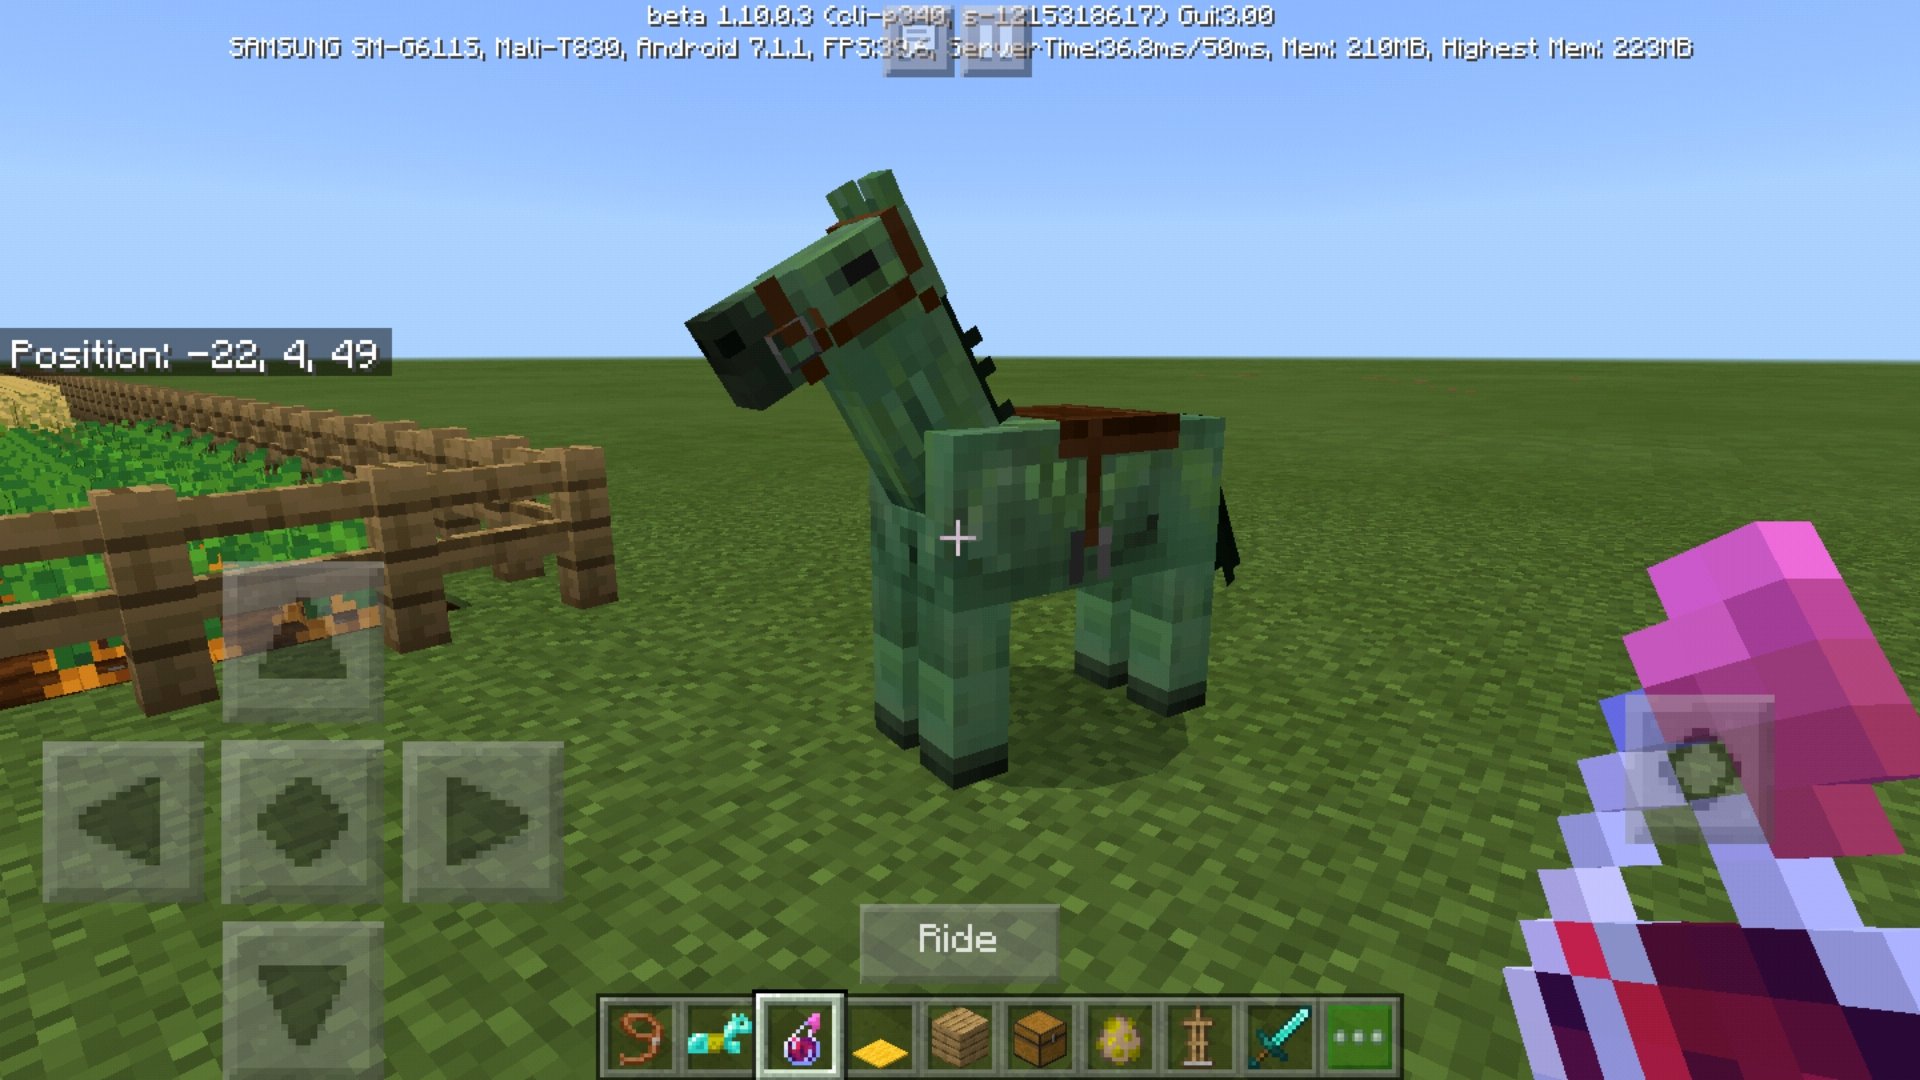 Tame zombie horse.